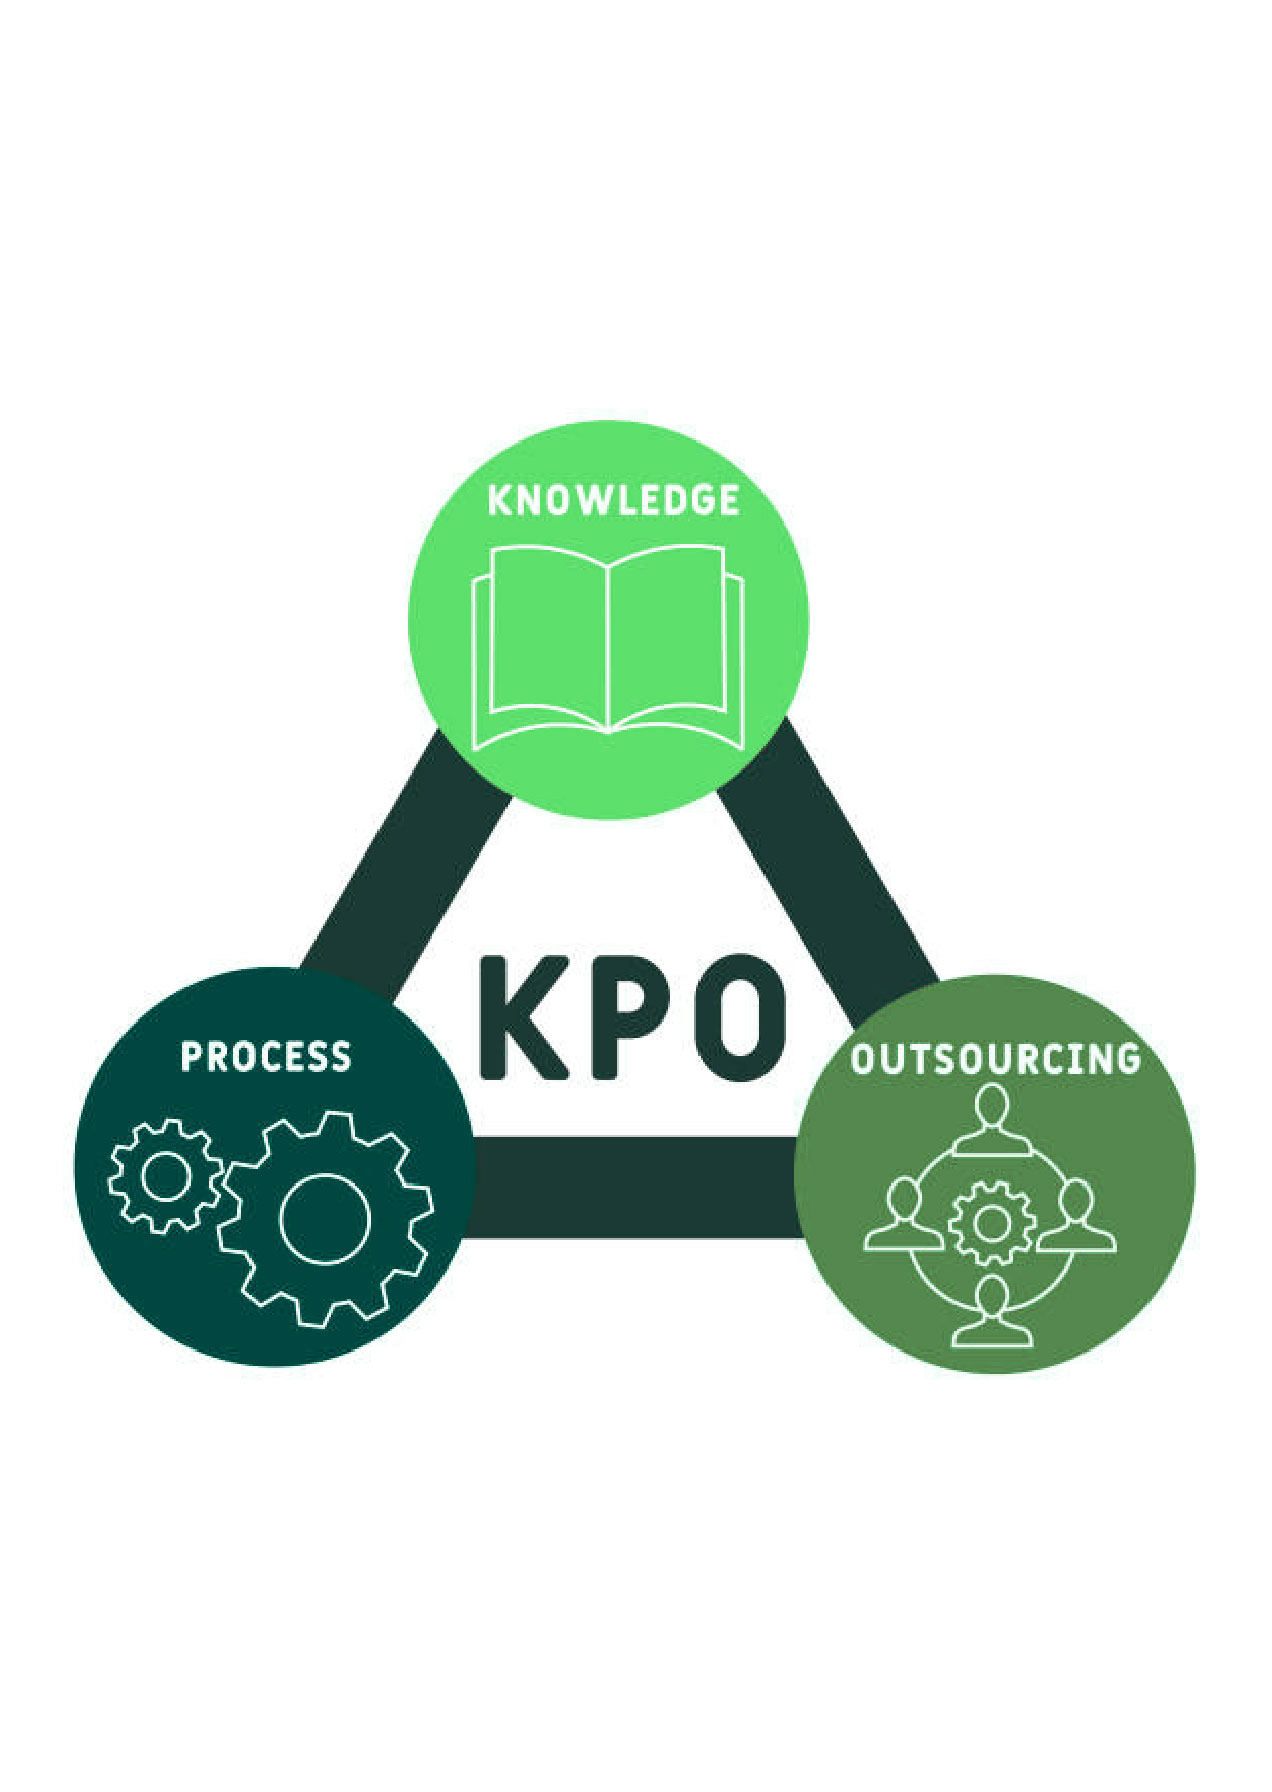 Facilities Of KPO
